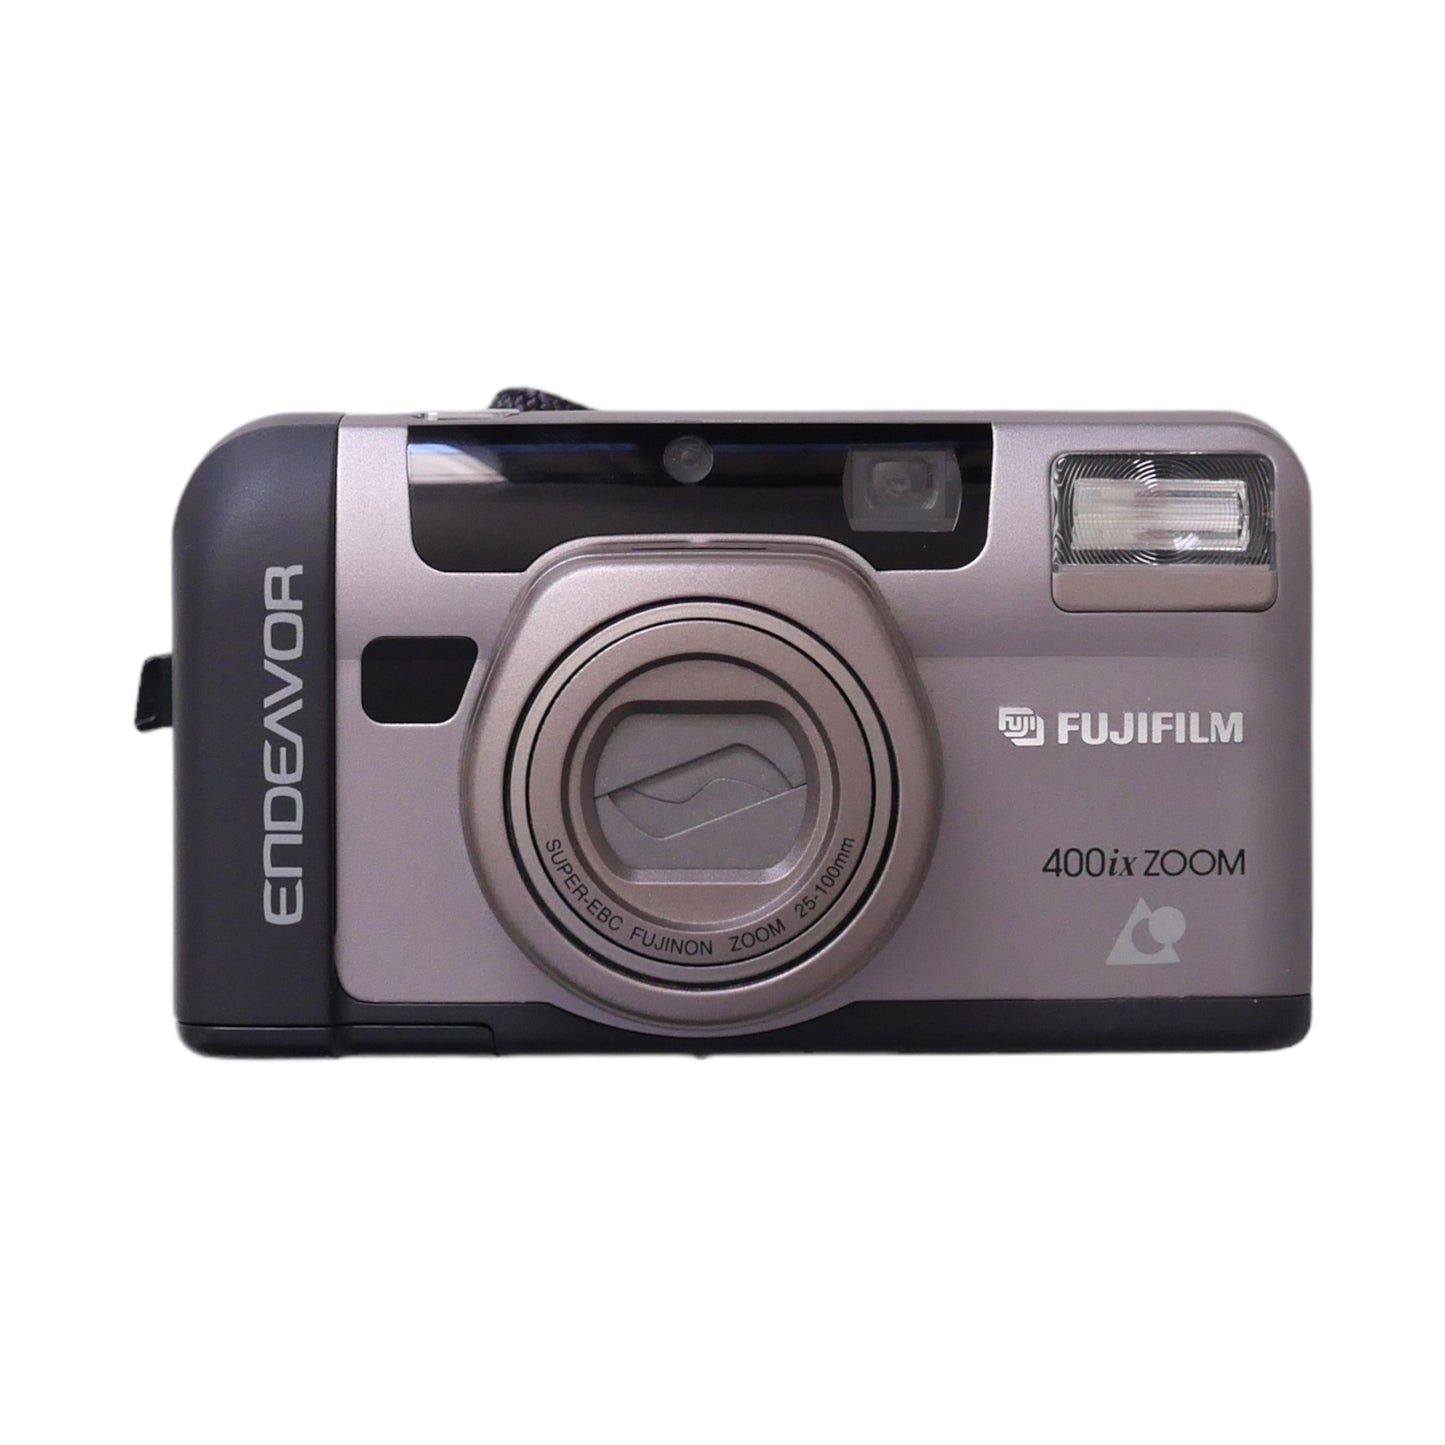 Fujifilm Endeavor 400ix Zoom Film Zoom Camera